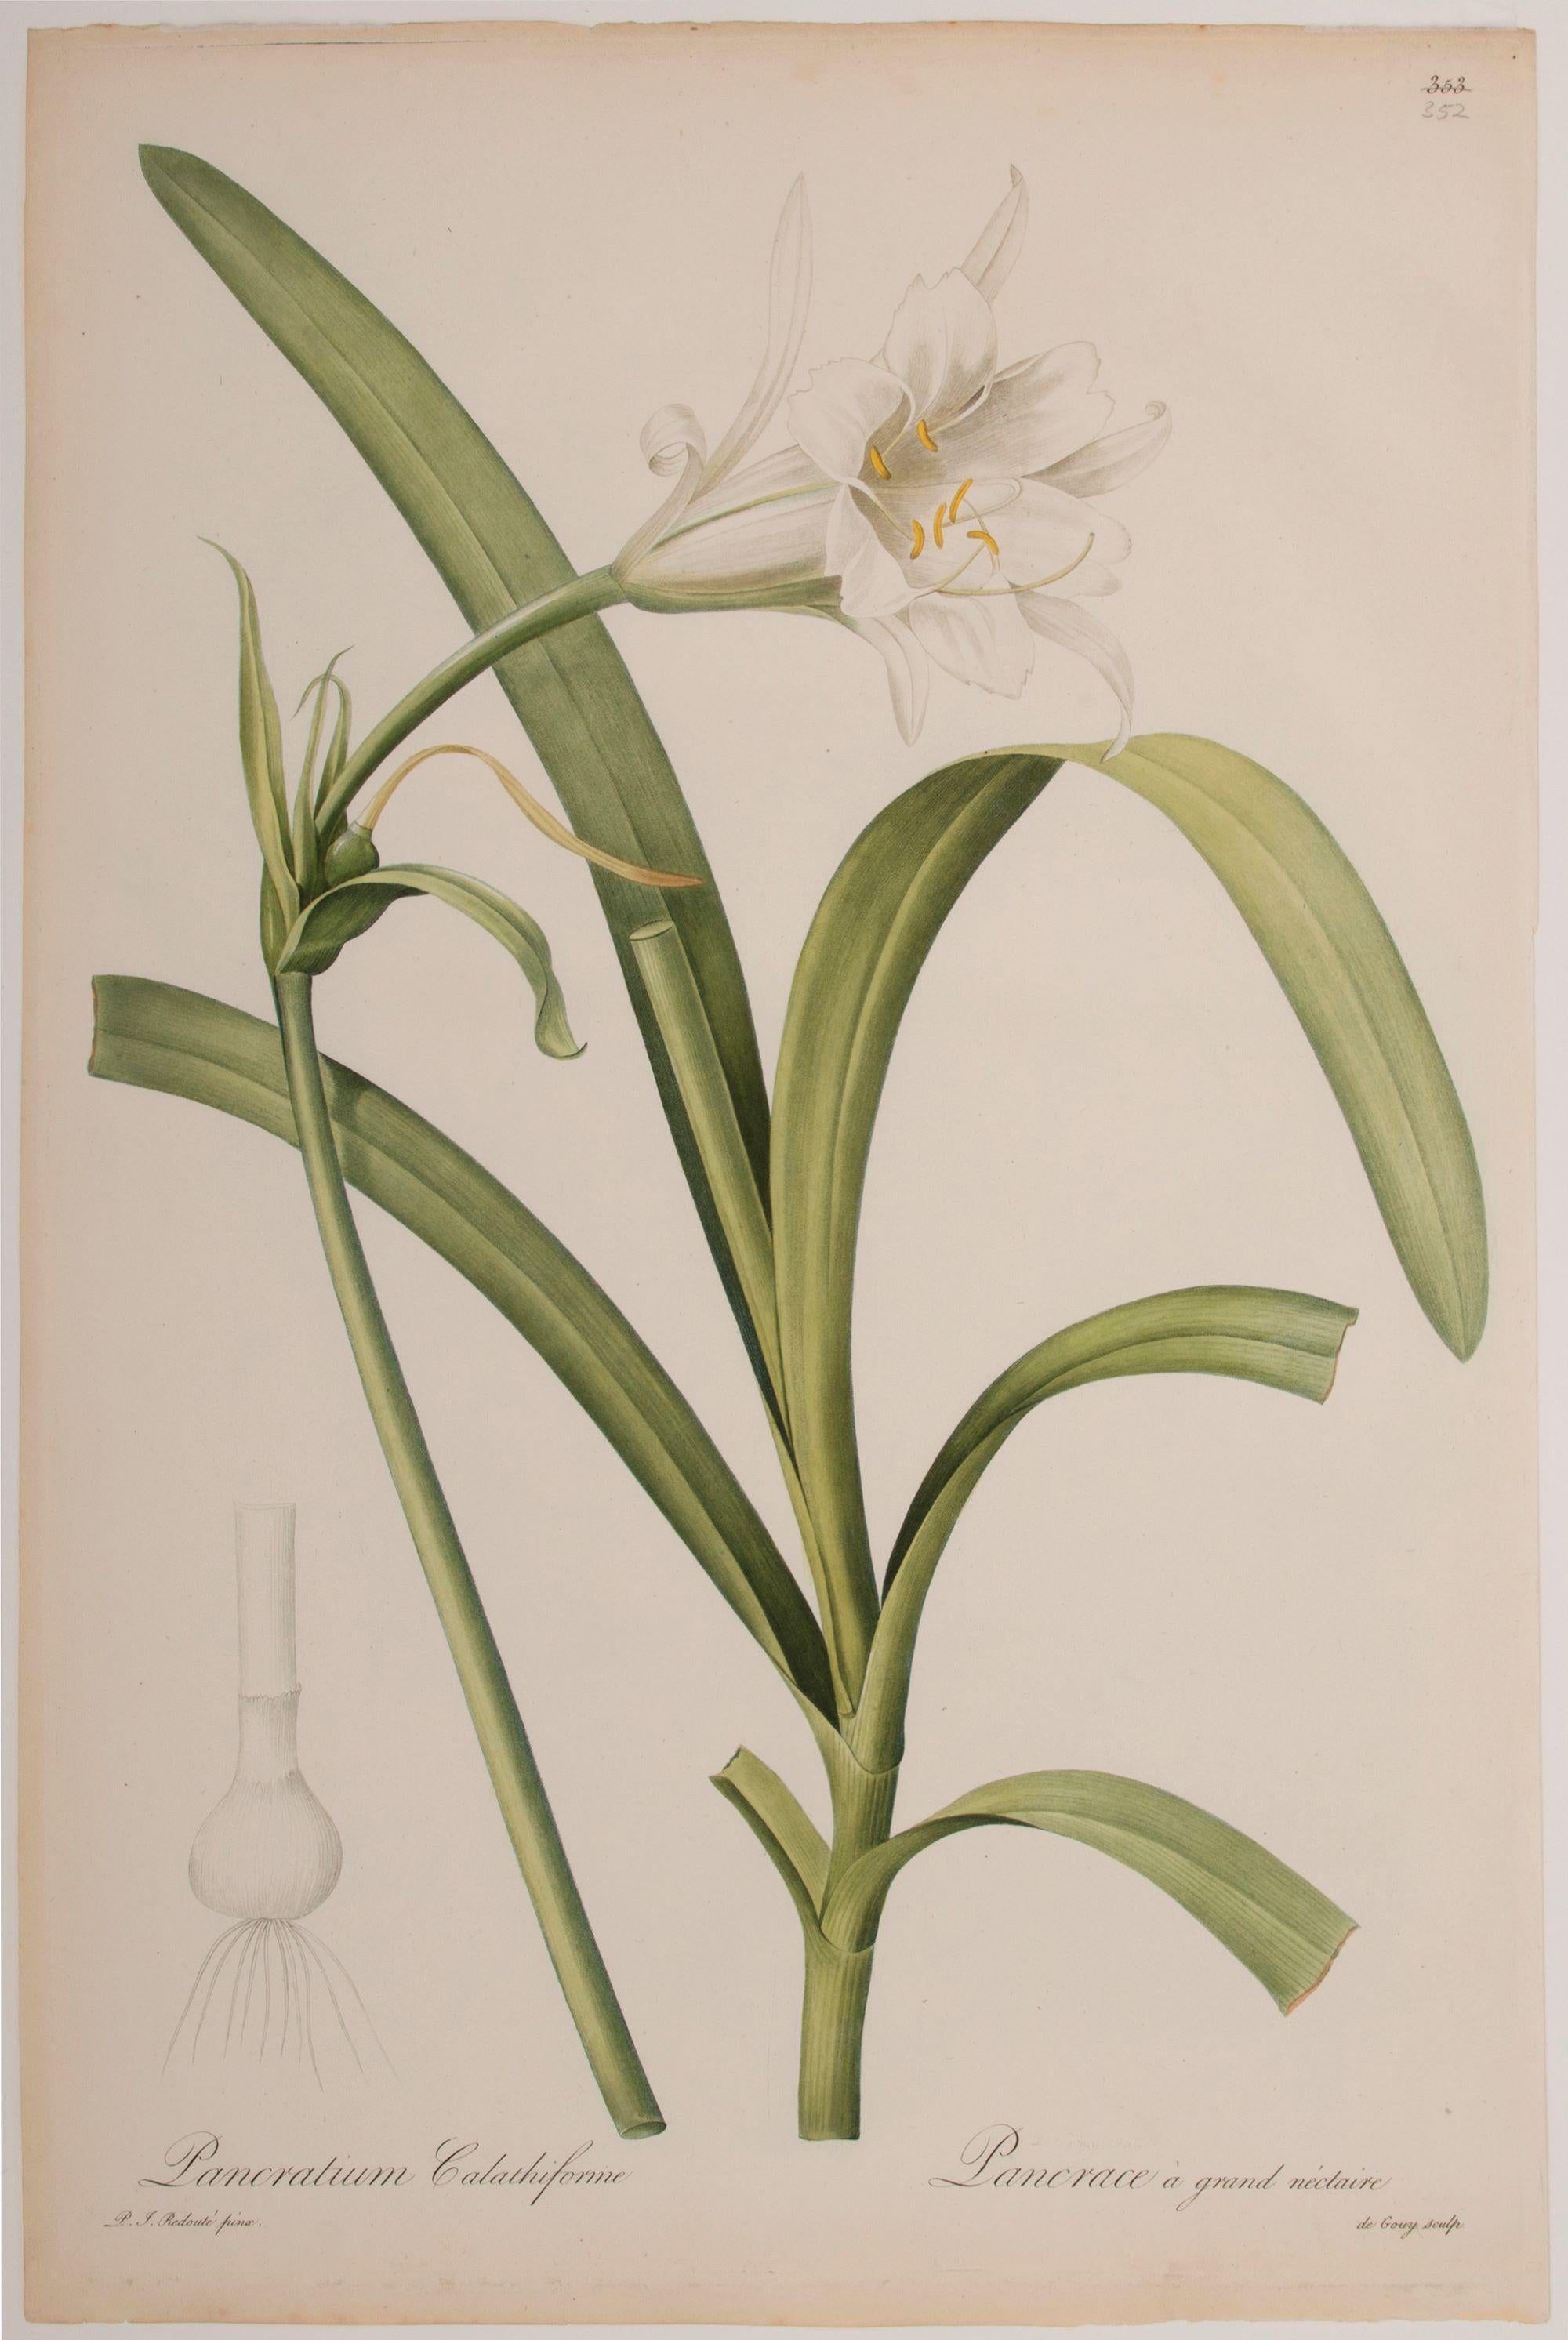 Pancratium Calathiforme  - Print by Pierre-Joseph Redouté